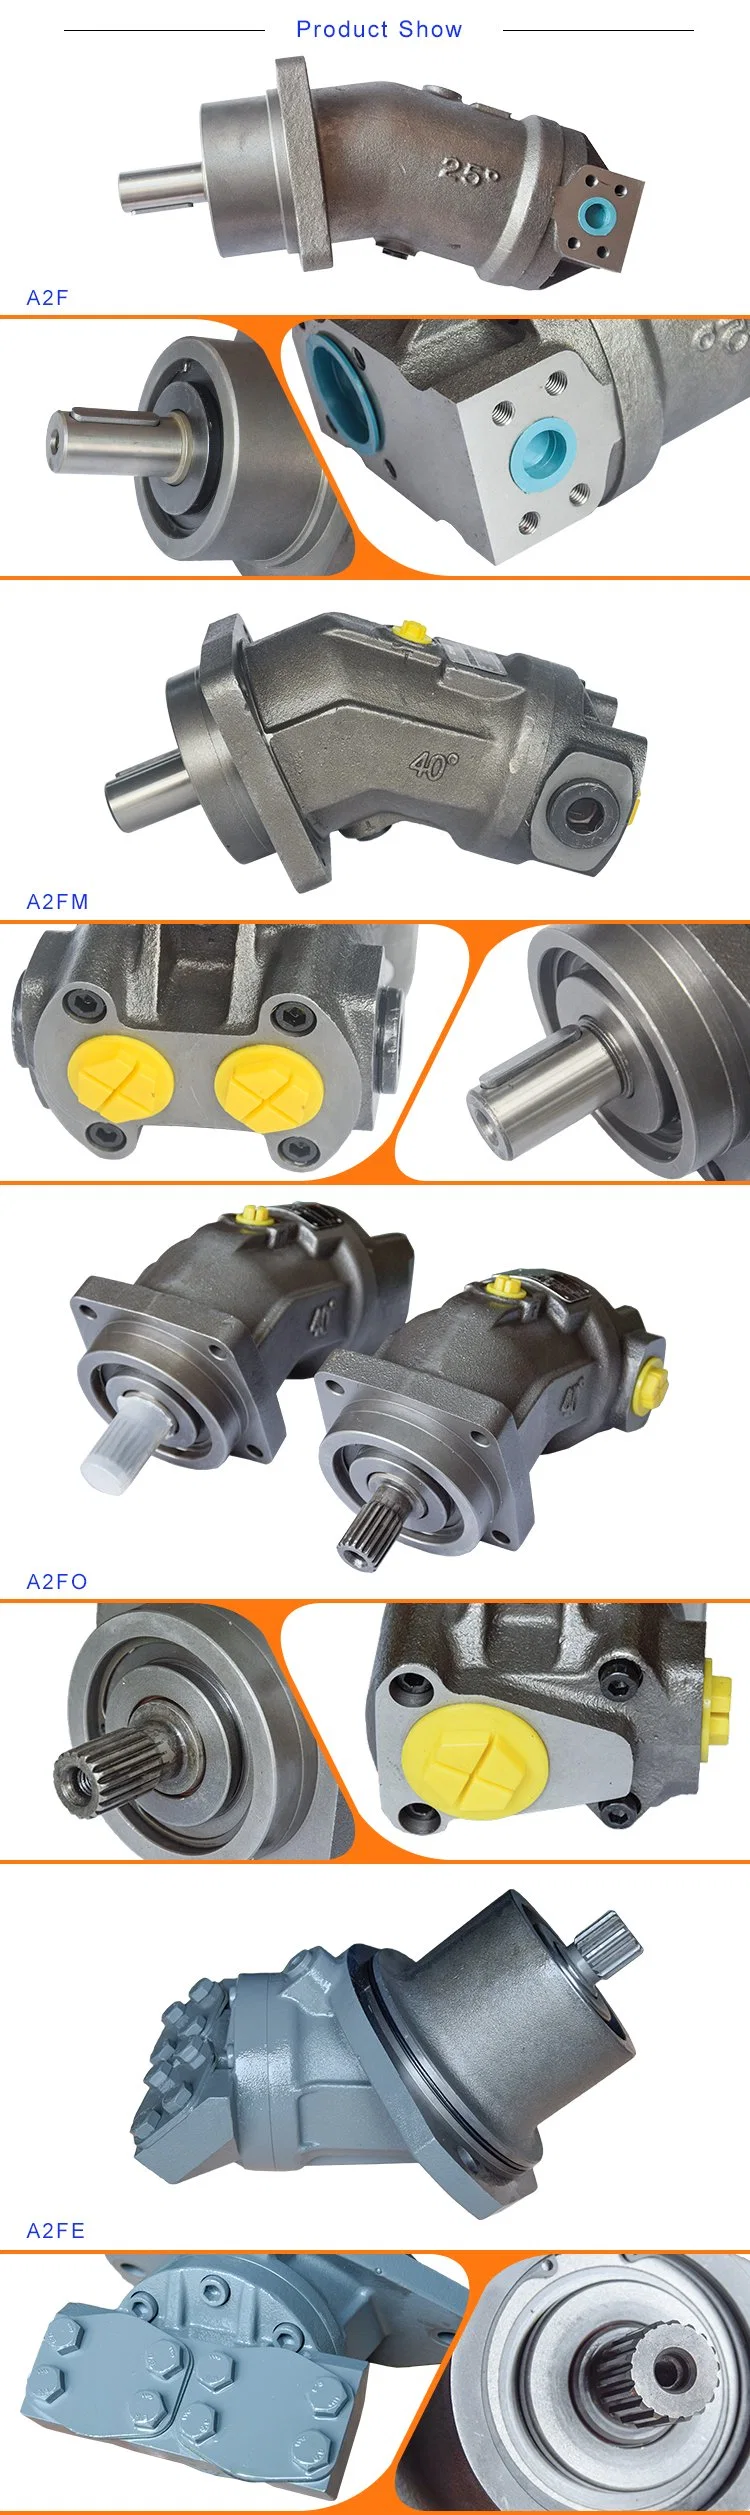 China 6.1 Series A2f A2fo A2FM A2fe High Speed Motor Rexroth Bent Axis Hydraulic Axial Piston Pump